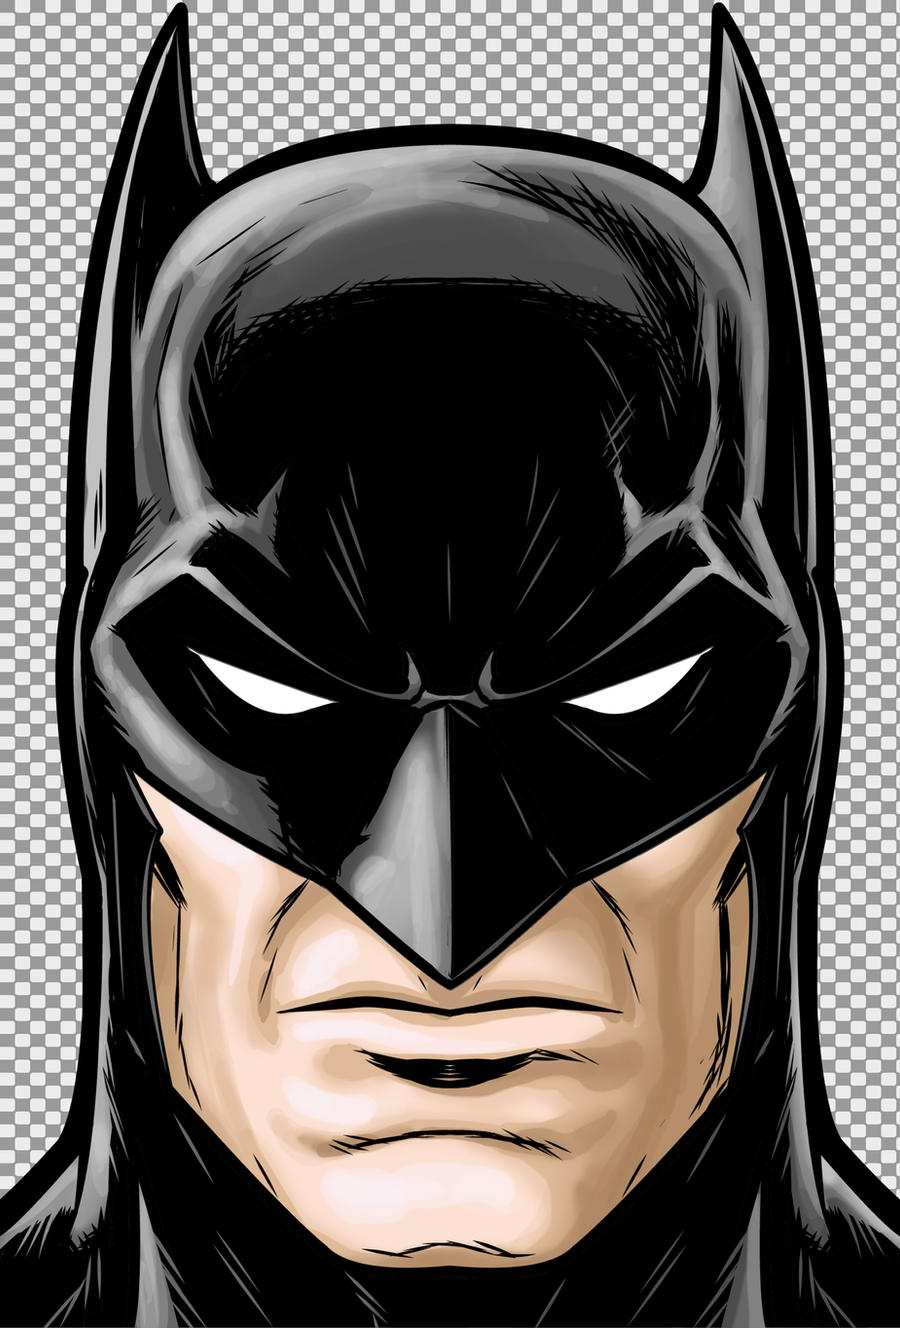 Batman Dark knight by Thuddleston on DeviantArt